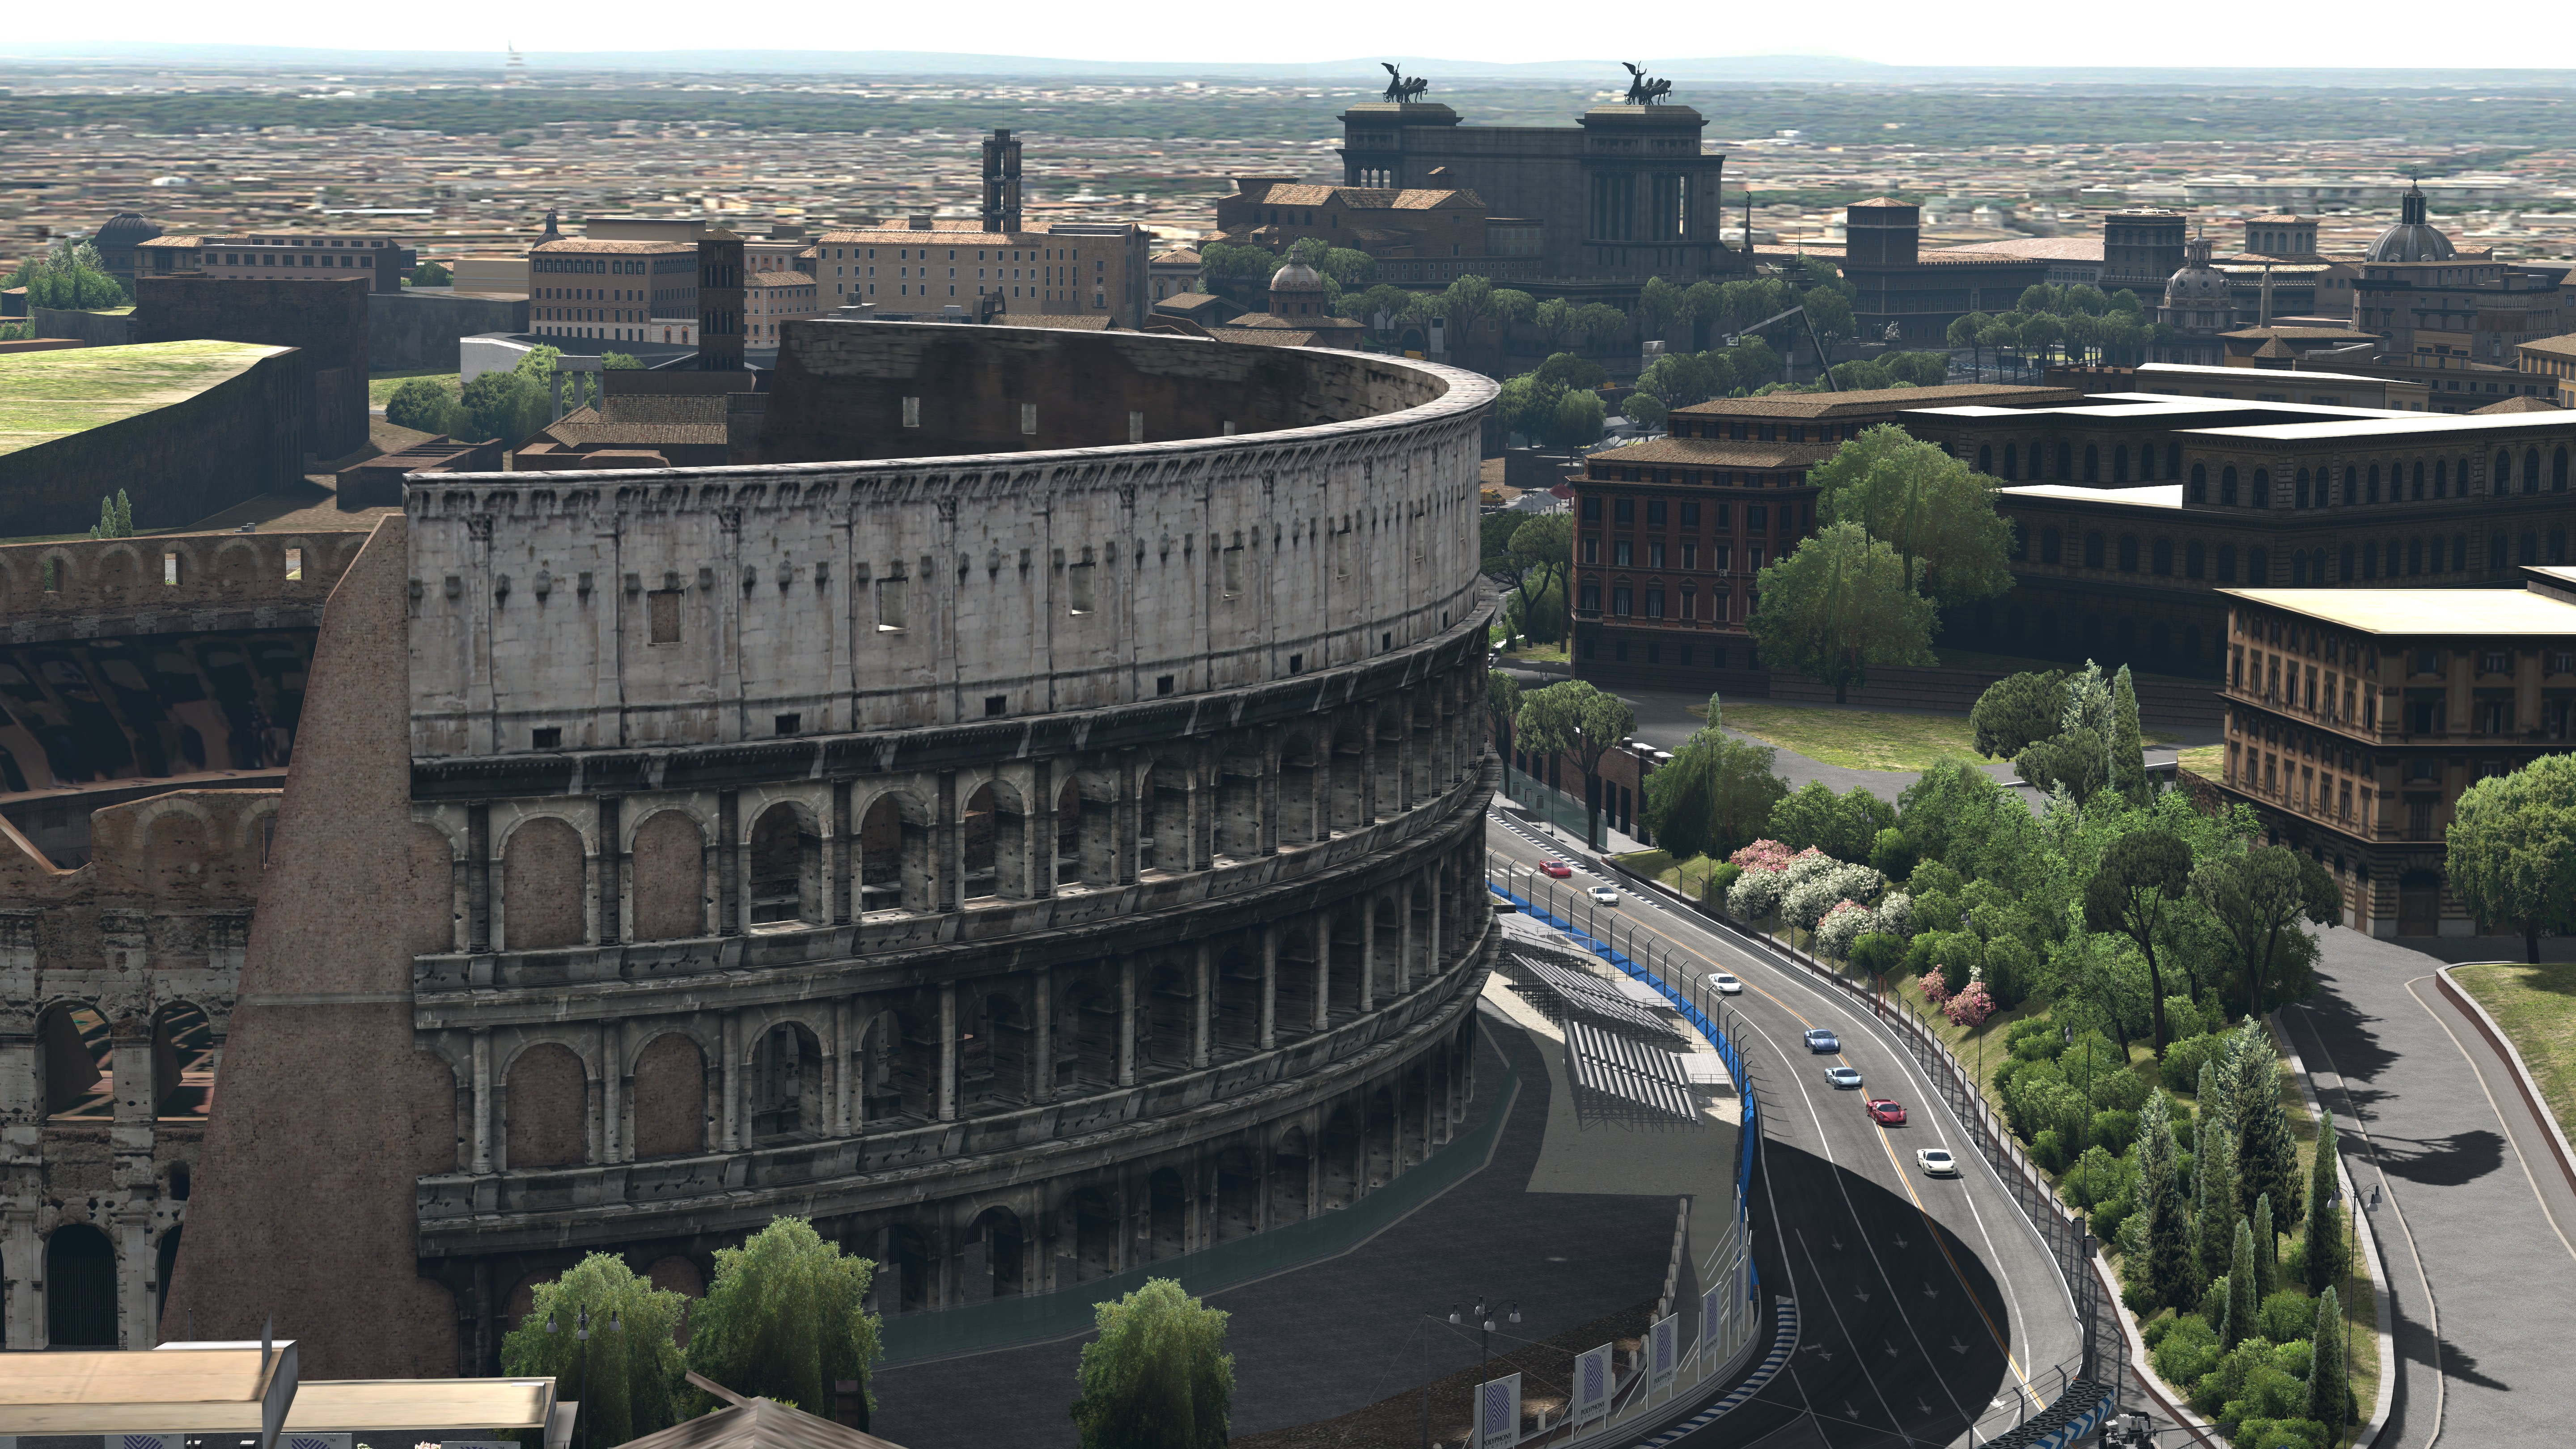 General 5760x3240 Rome Italy cityscape digital art Colliseum ancient ruins CGI video games racing Assetto Corsa